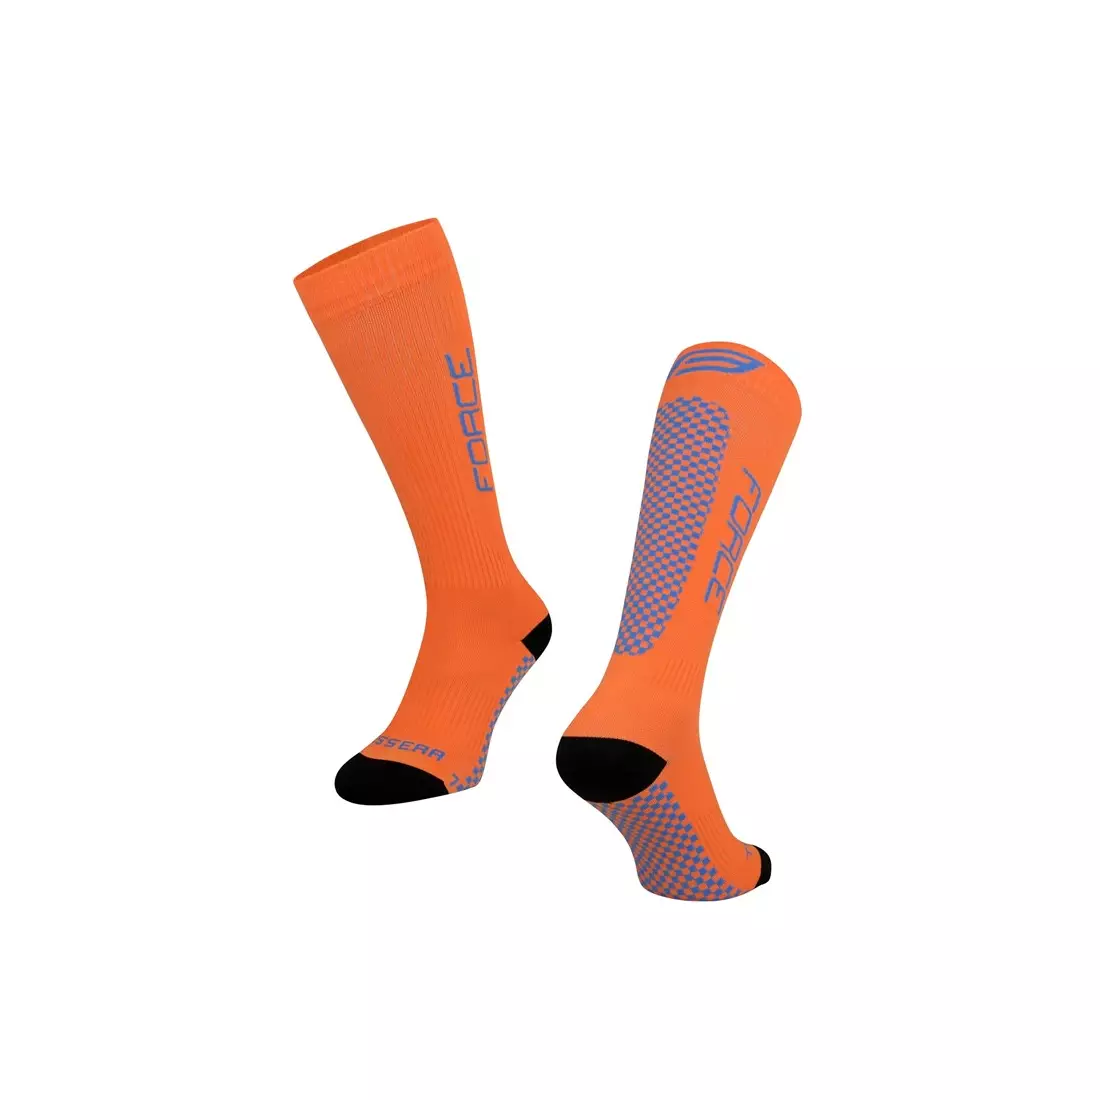 FORCE TESSERA COMPRESSION kompressziós zokni, narancssárga